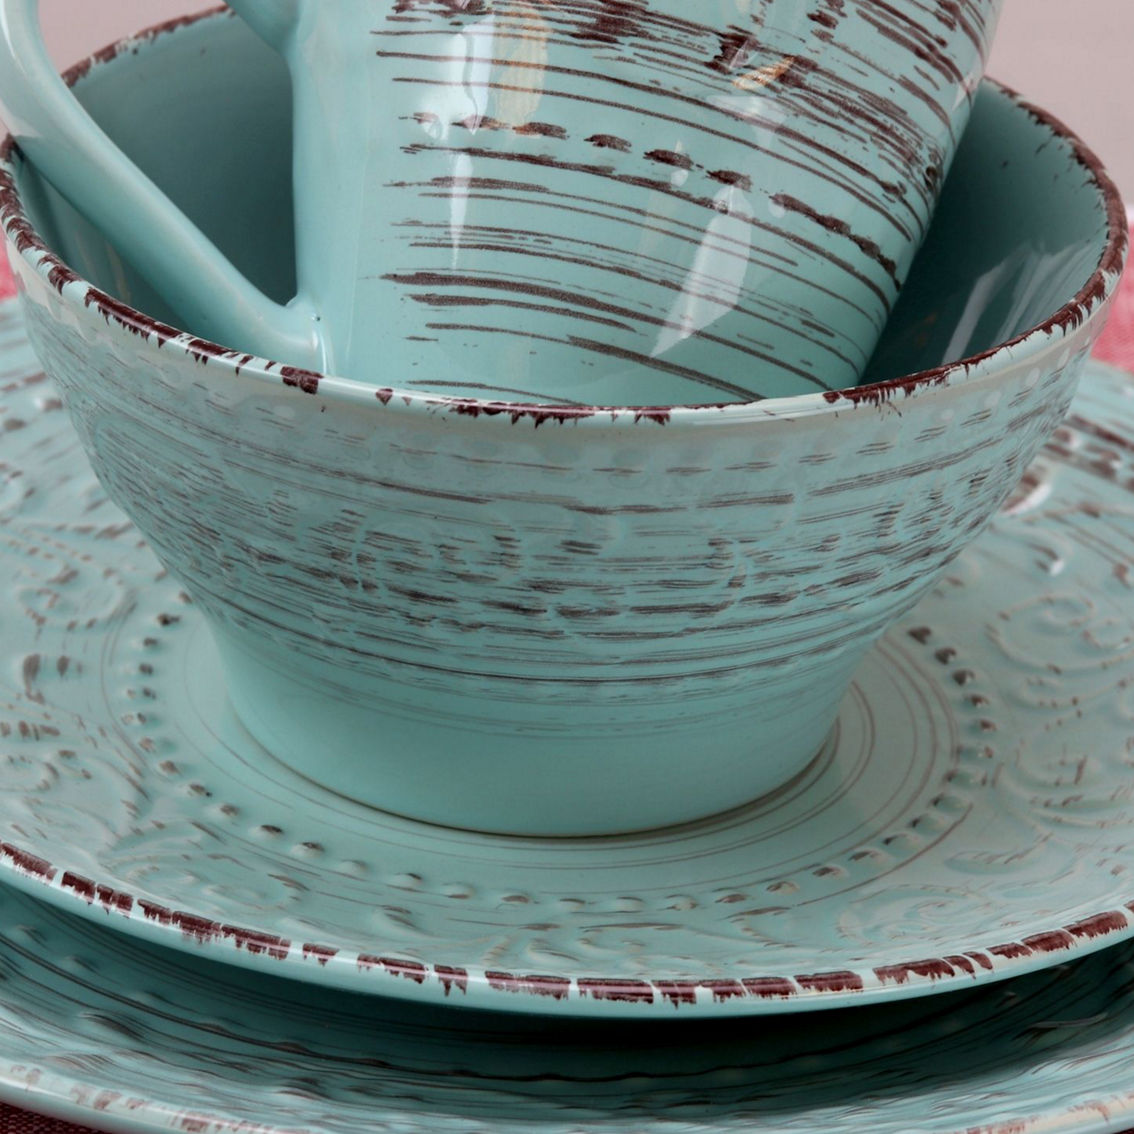 Elama Malibu Waves 16-Piece Dinnerware Set in Turquoise - Image 3 of 5